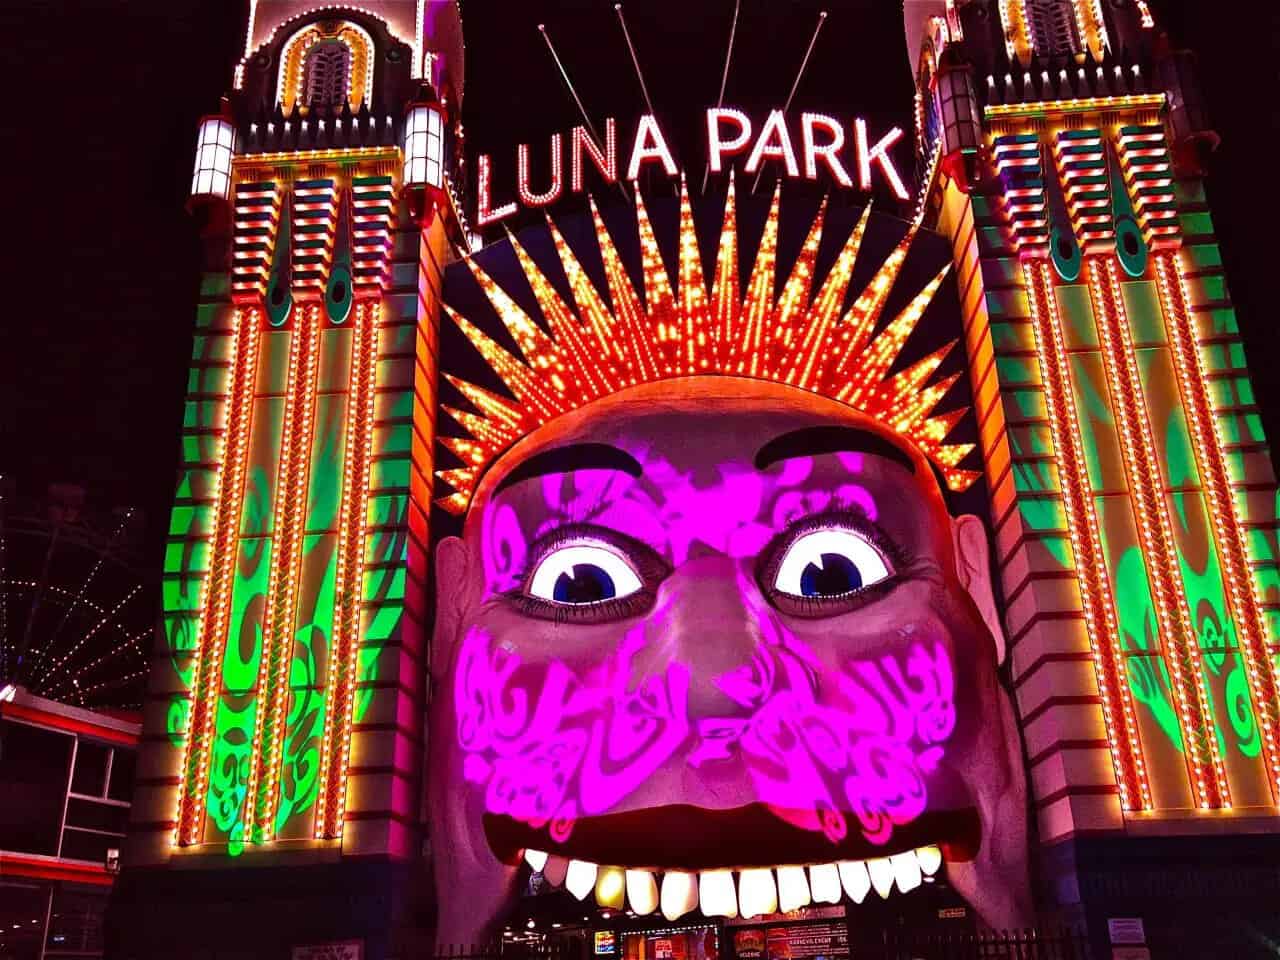 Luna Park Halloscream